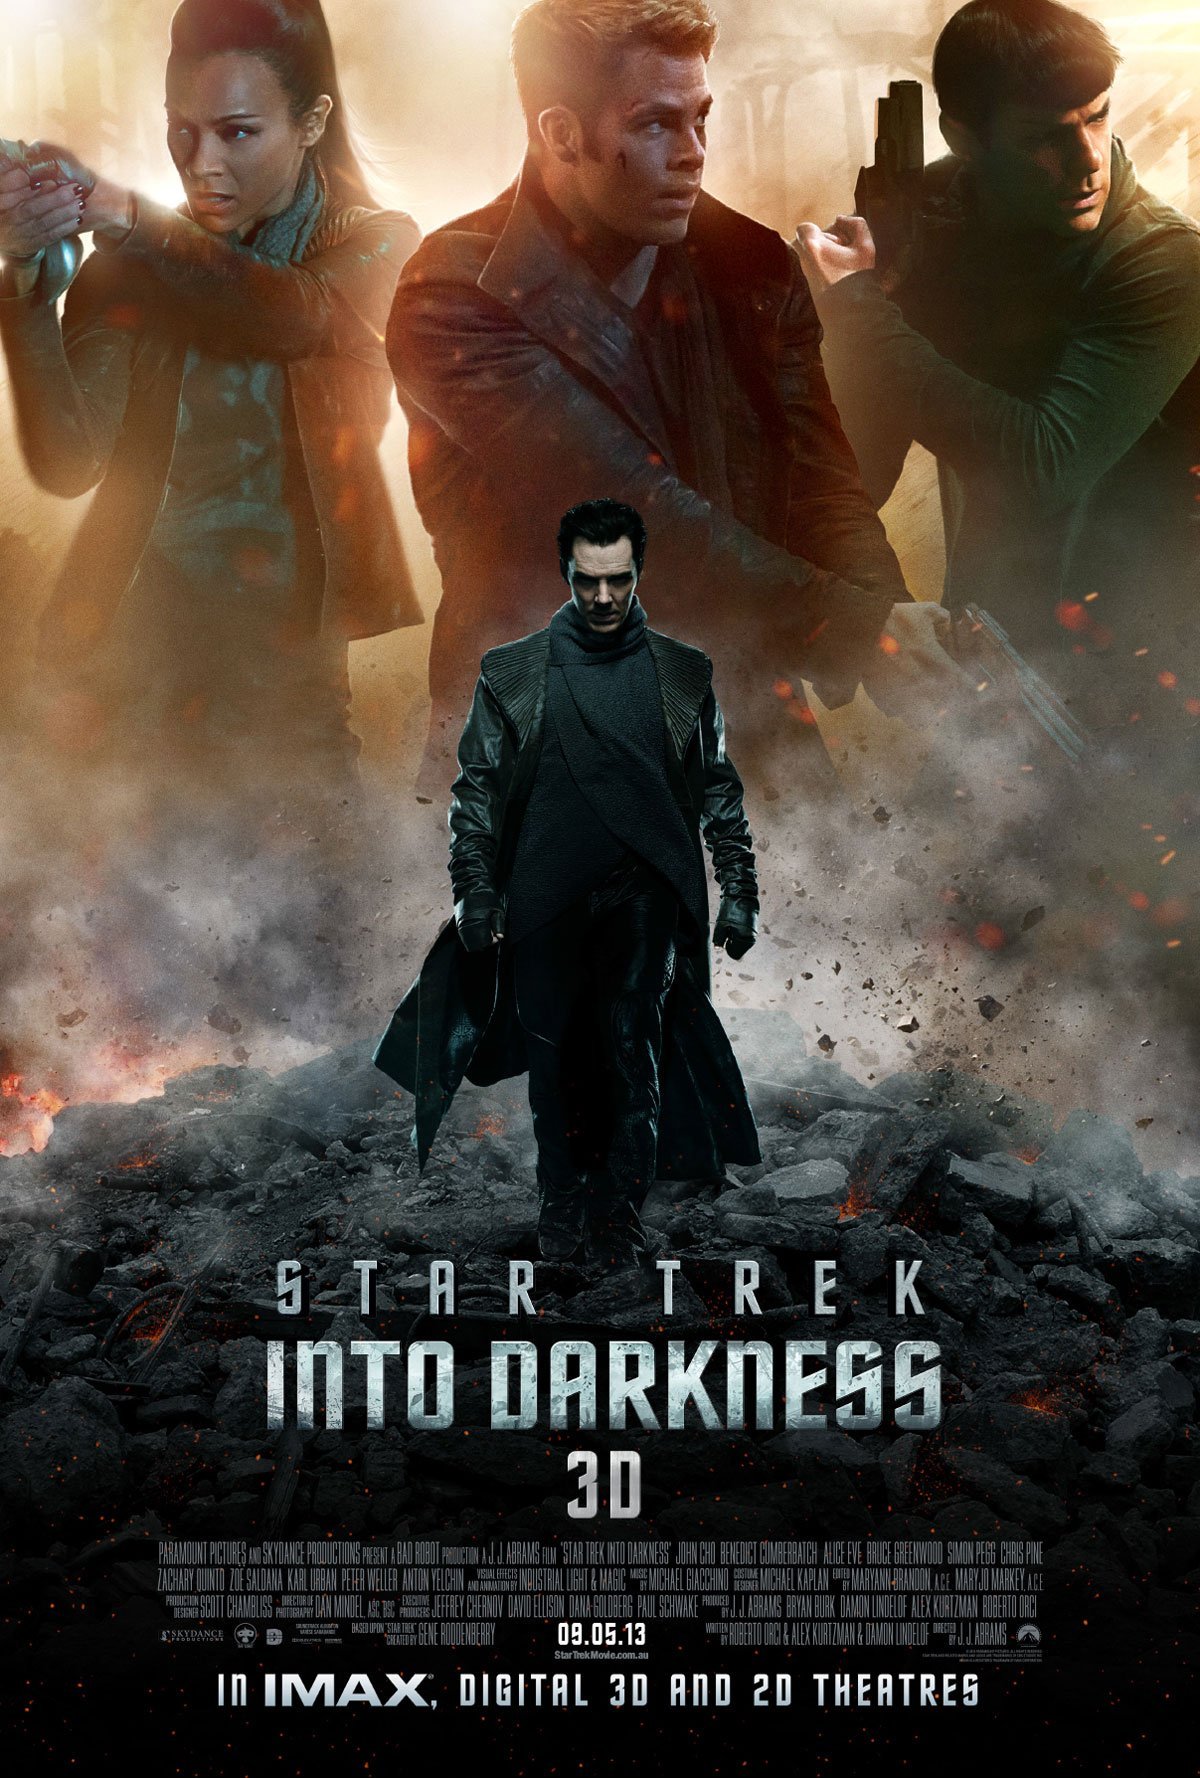 Film Review: Star Trek: Into Darkness